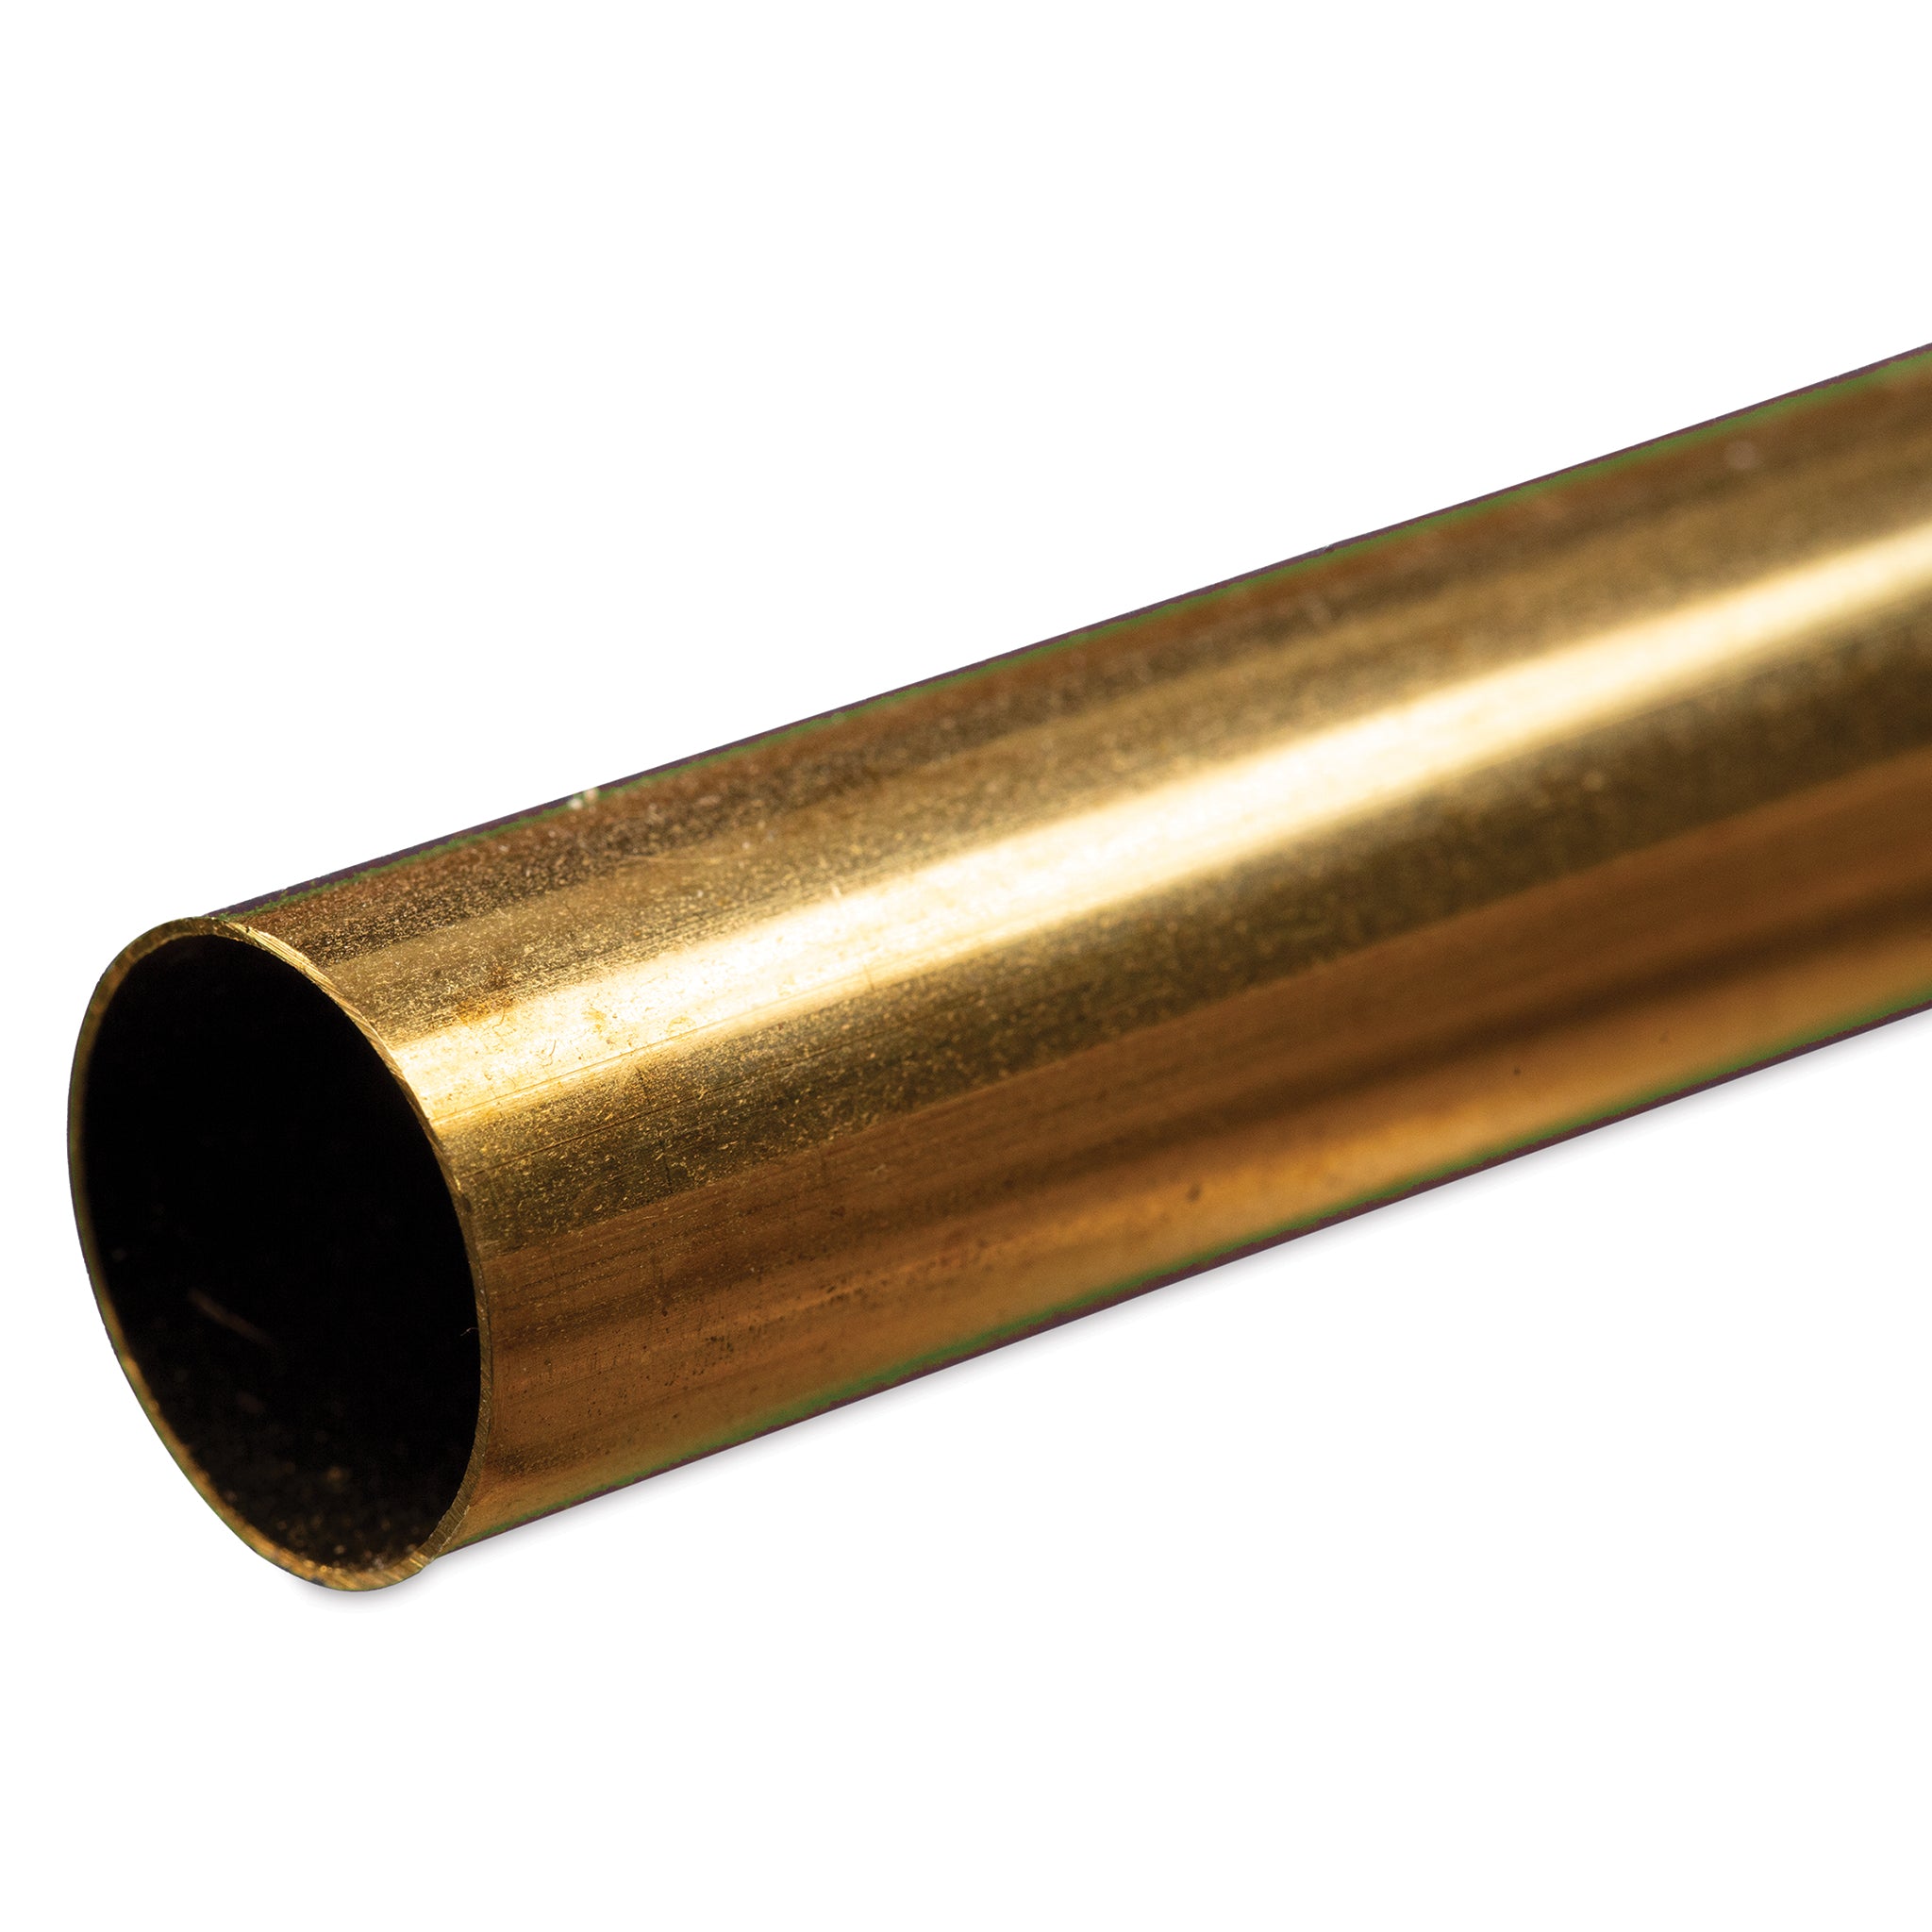 K&S Metals 8138 Round Brass Tube 15/32" OD x 0.014" Wall x 12" Long (1 Piece)